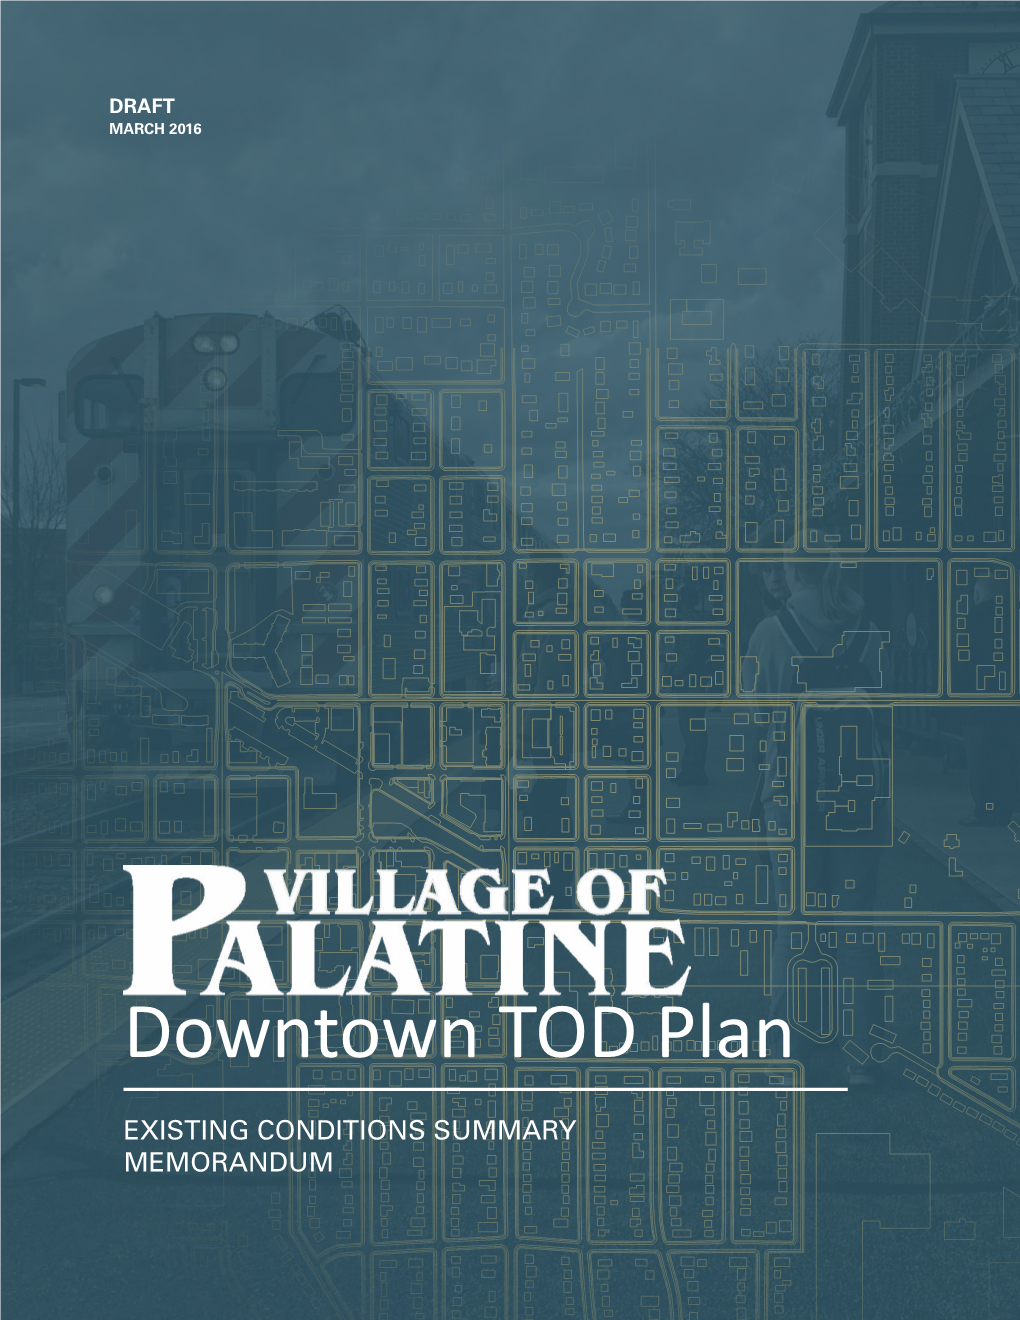 Downtown Transit Oriented Development Plan